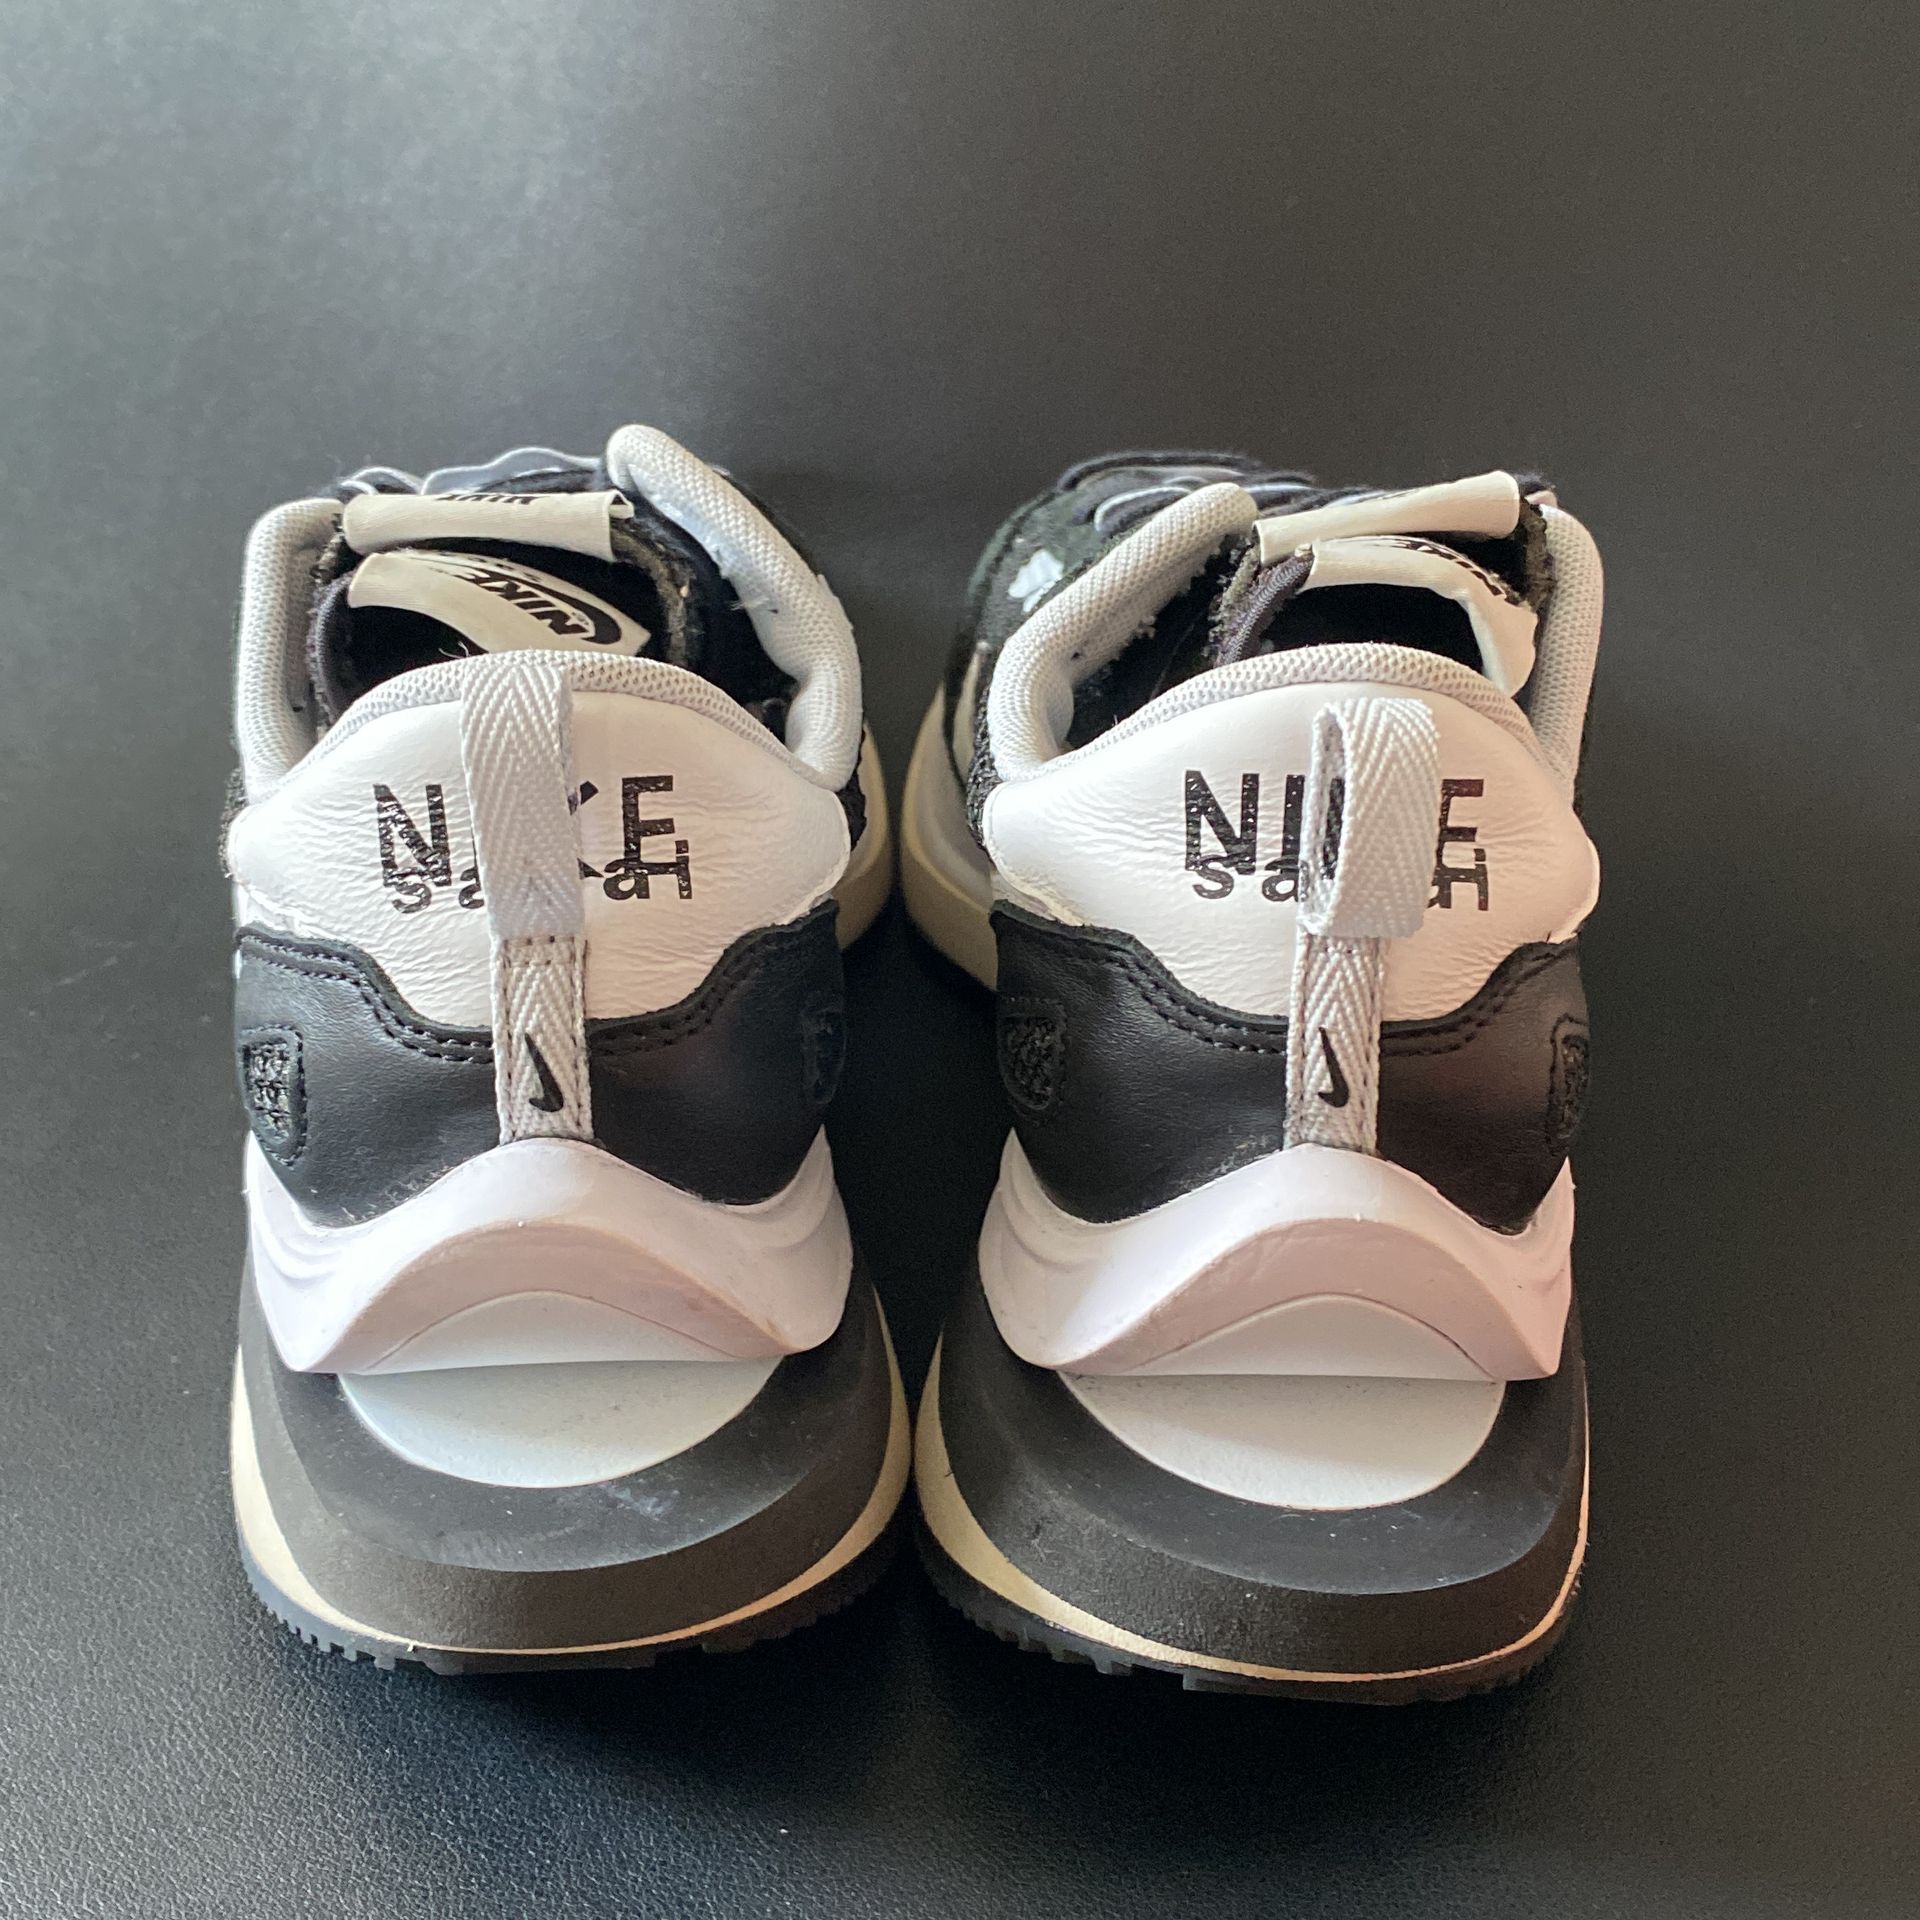 Nike Sacai x VaporWaffle 'Black White'